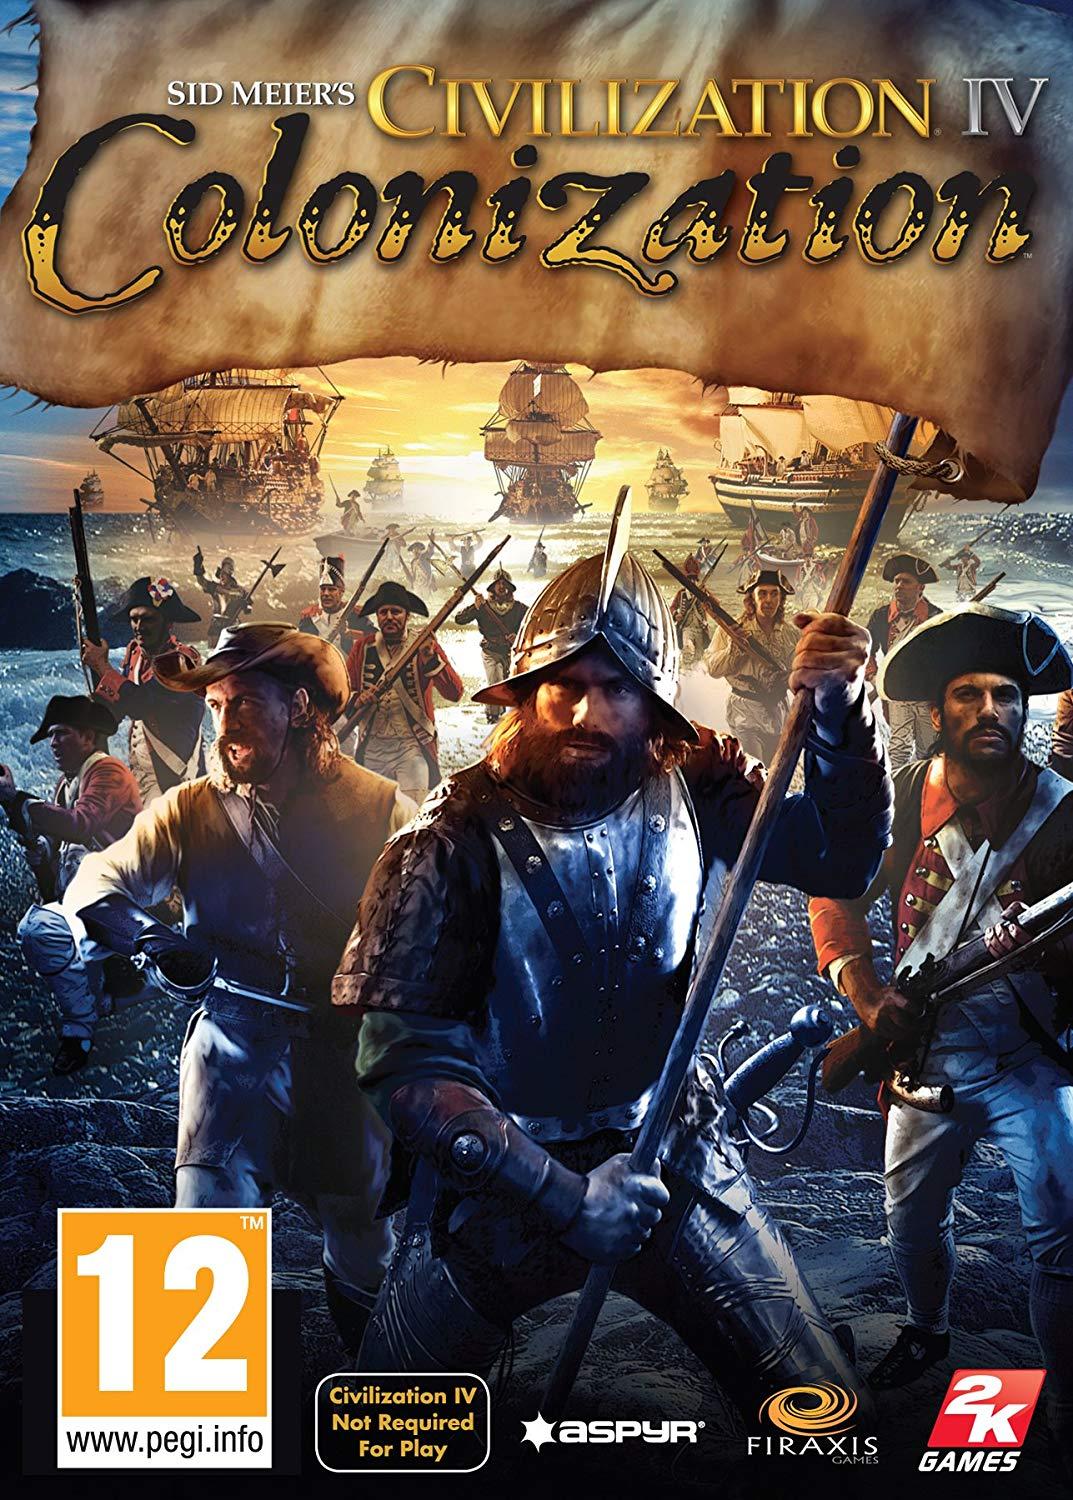 Sid Meier's Civilization IV: Colonialization Online Game Code